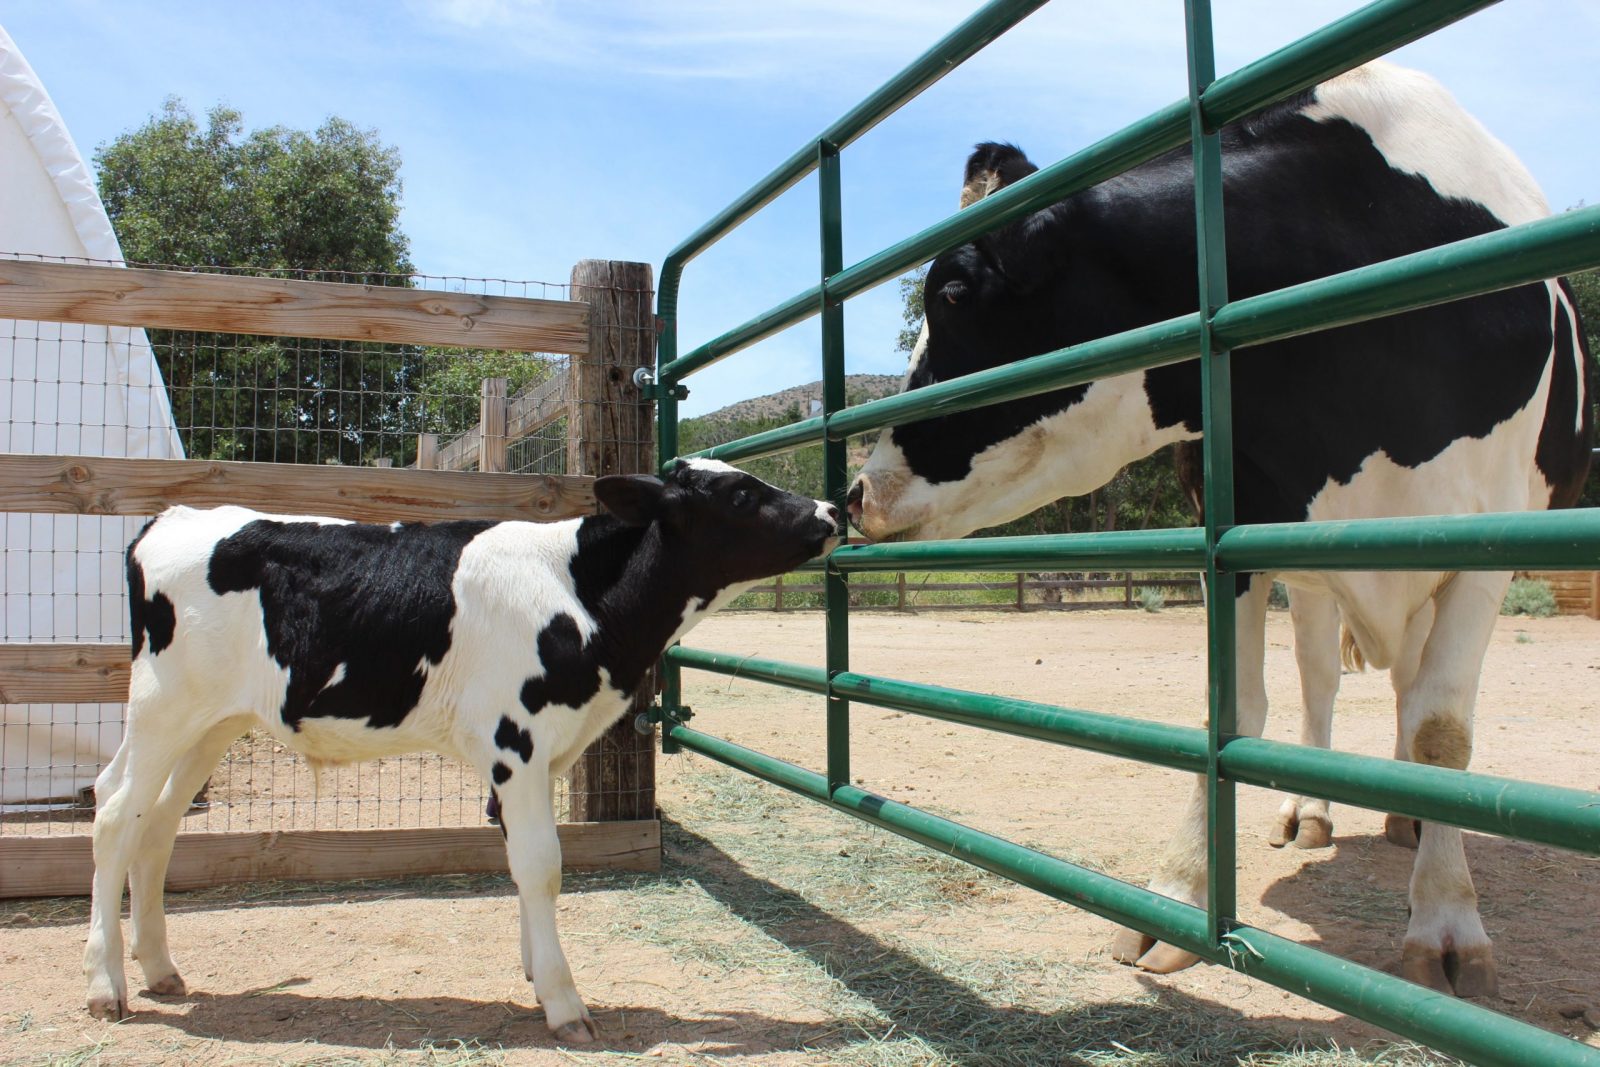 Dixon calf touches noses with Safran steer through a green fence